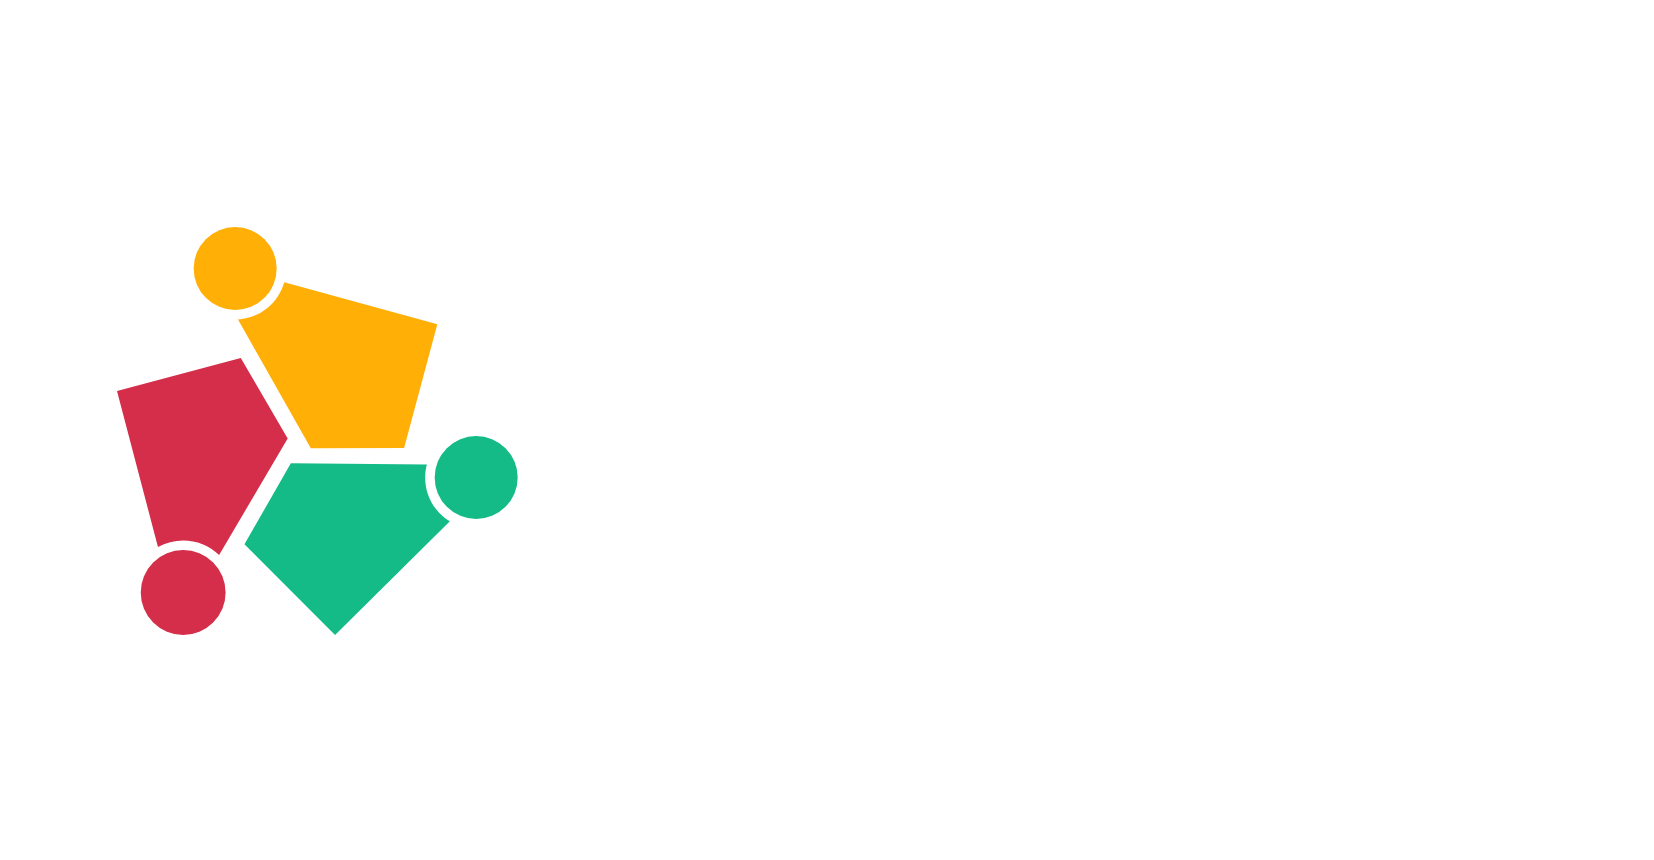 Sarkari Results Jobs